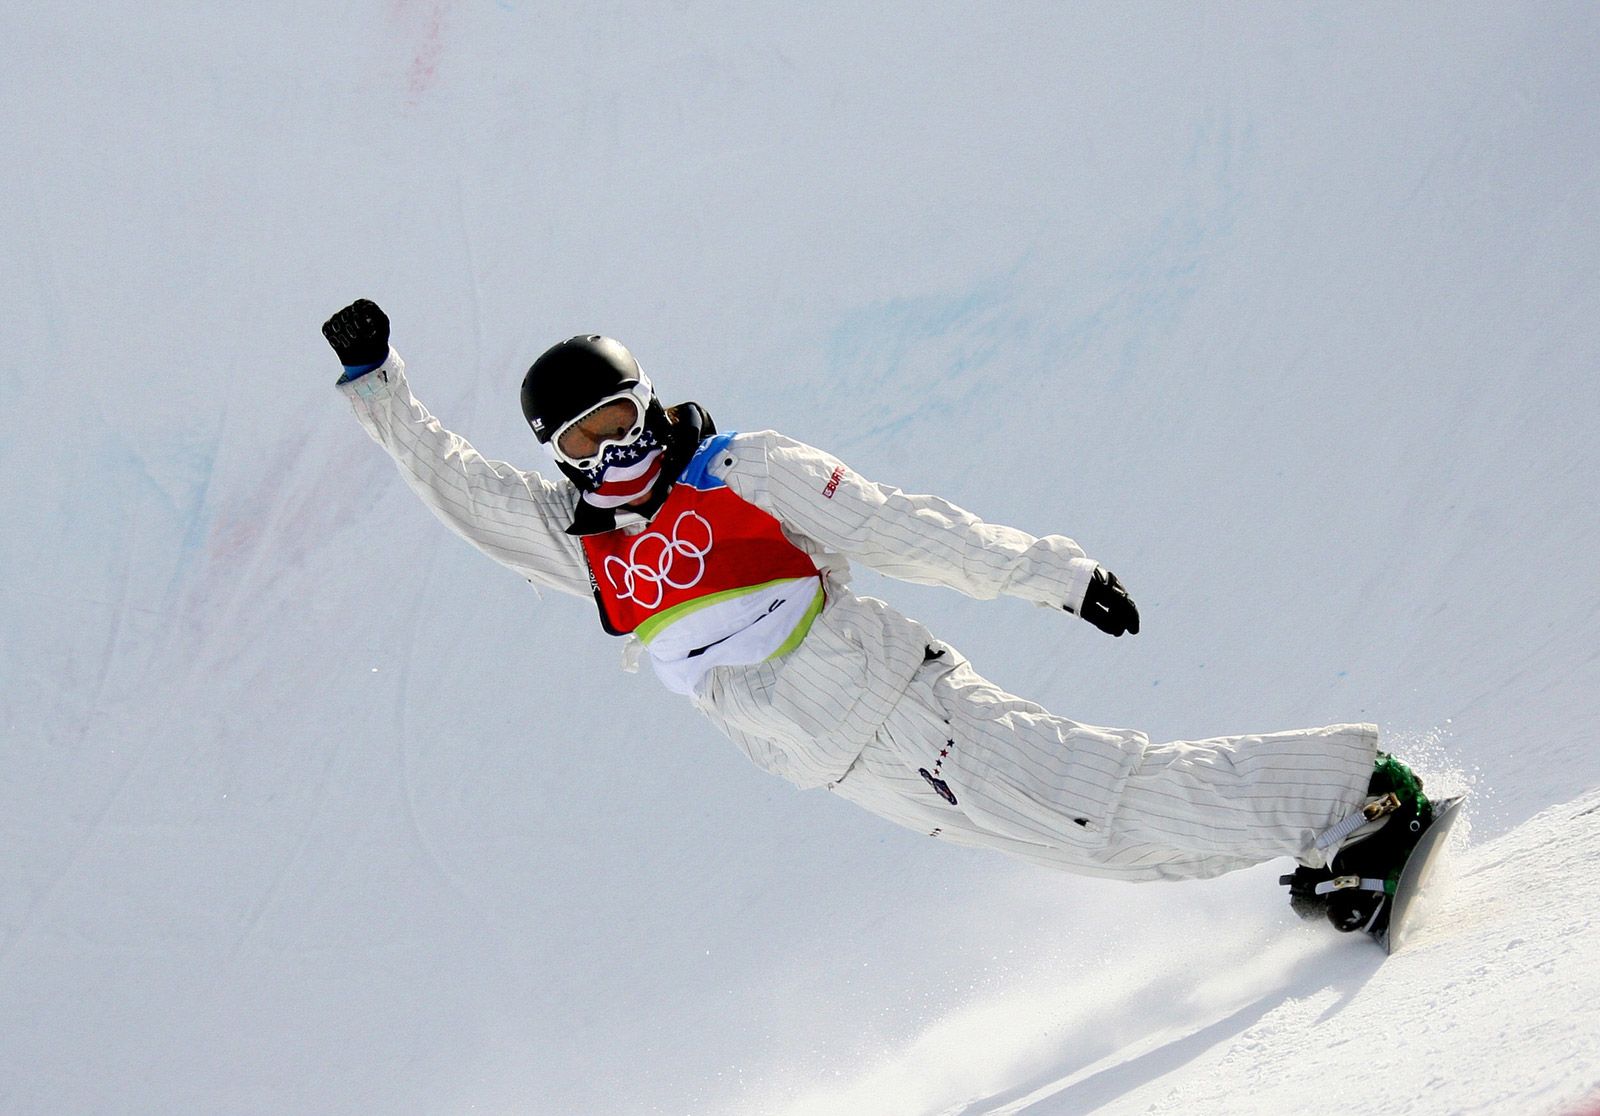 Snowboarding legend Shaun White: “I feel very fortunate that I got